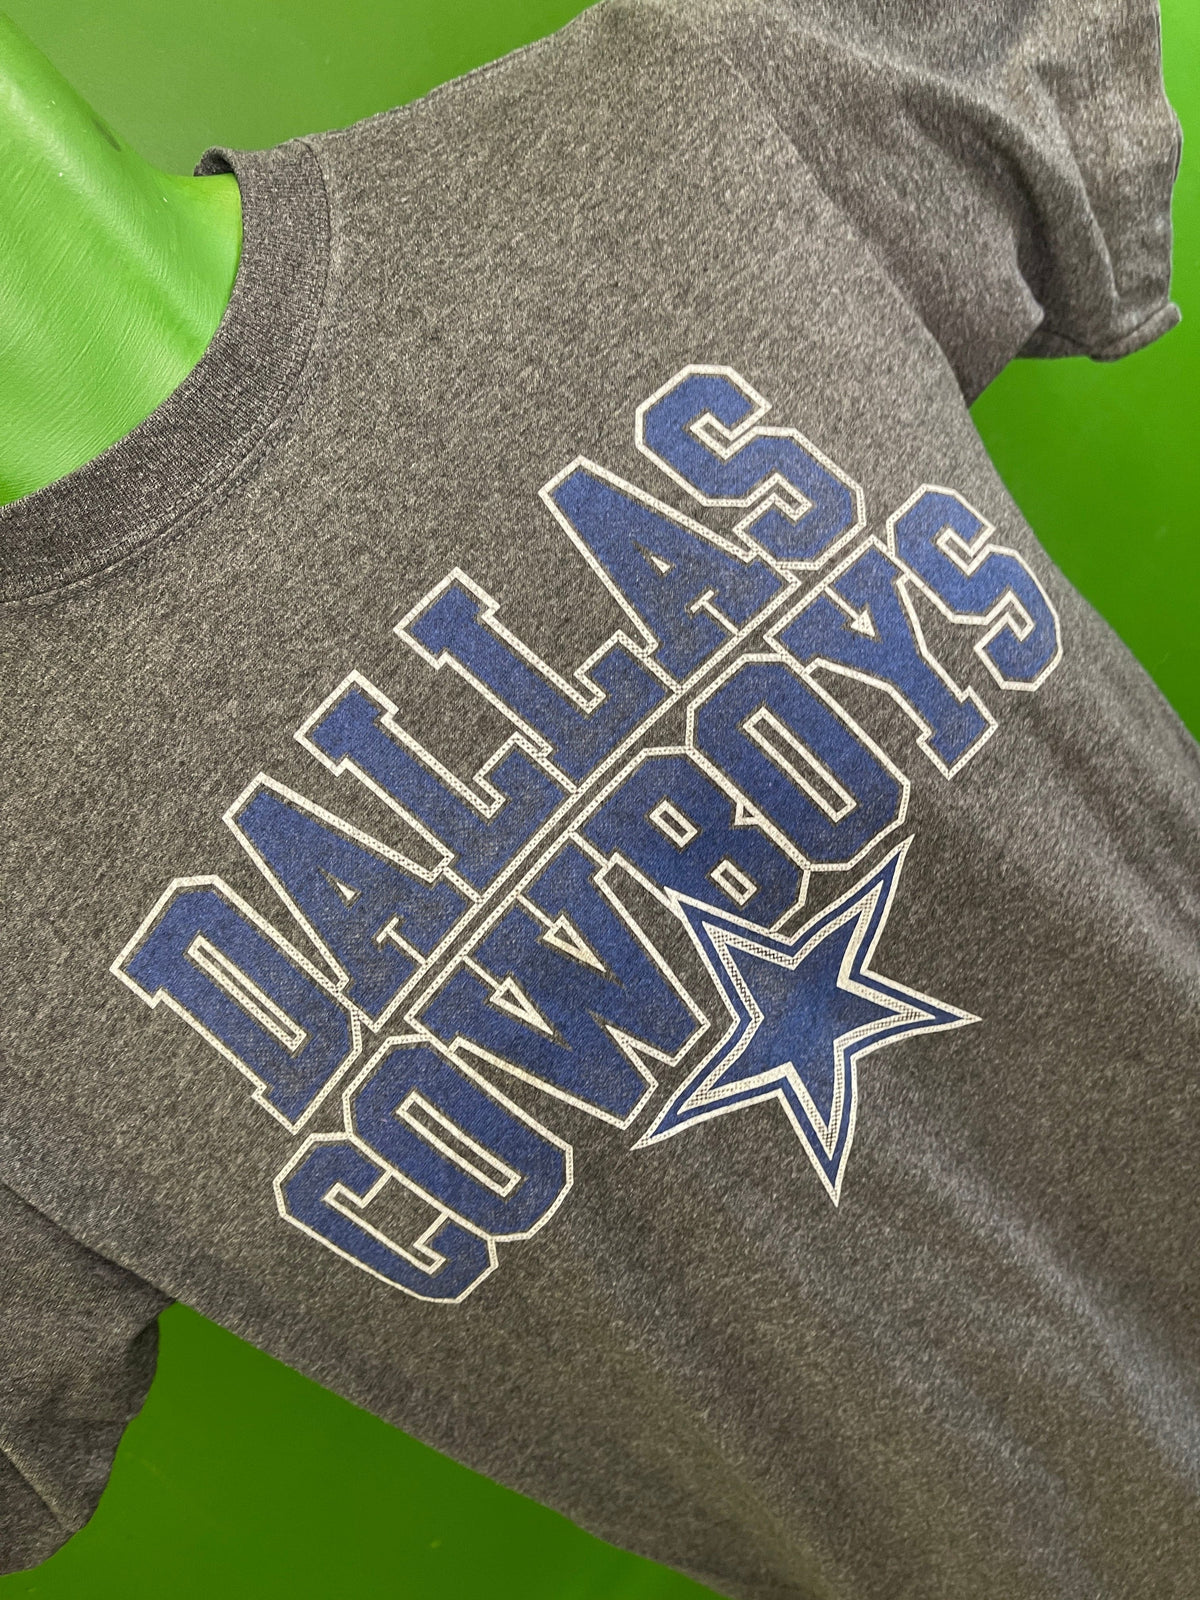 NFL Dallas Cowboys Heathered Charcoal T-Shirt Youth Medium 12-14